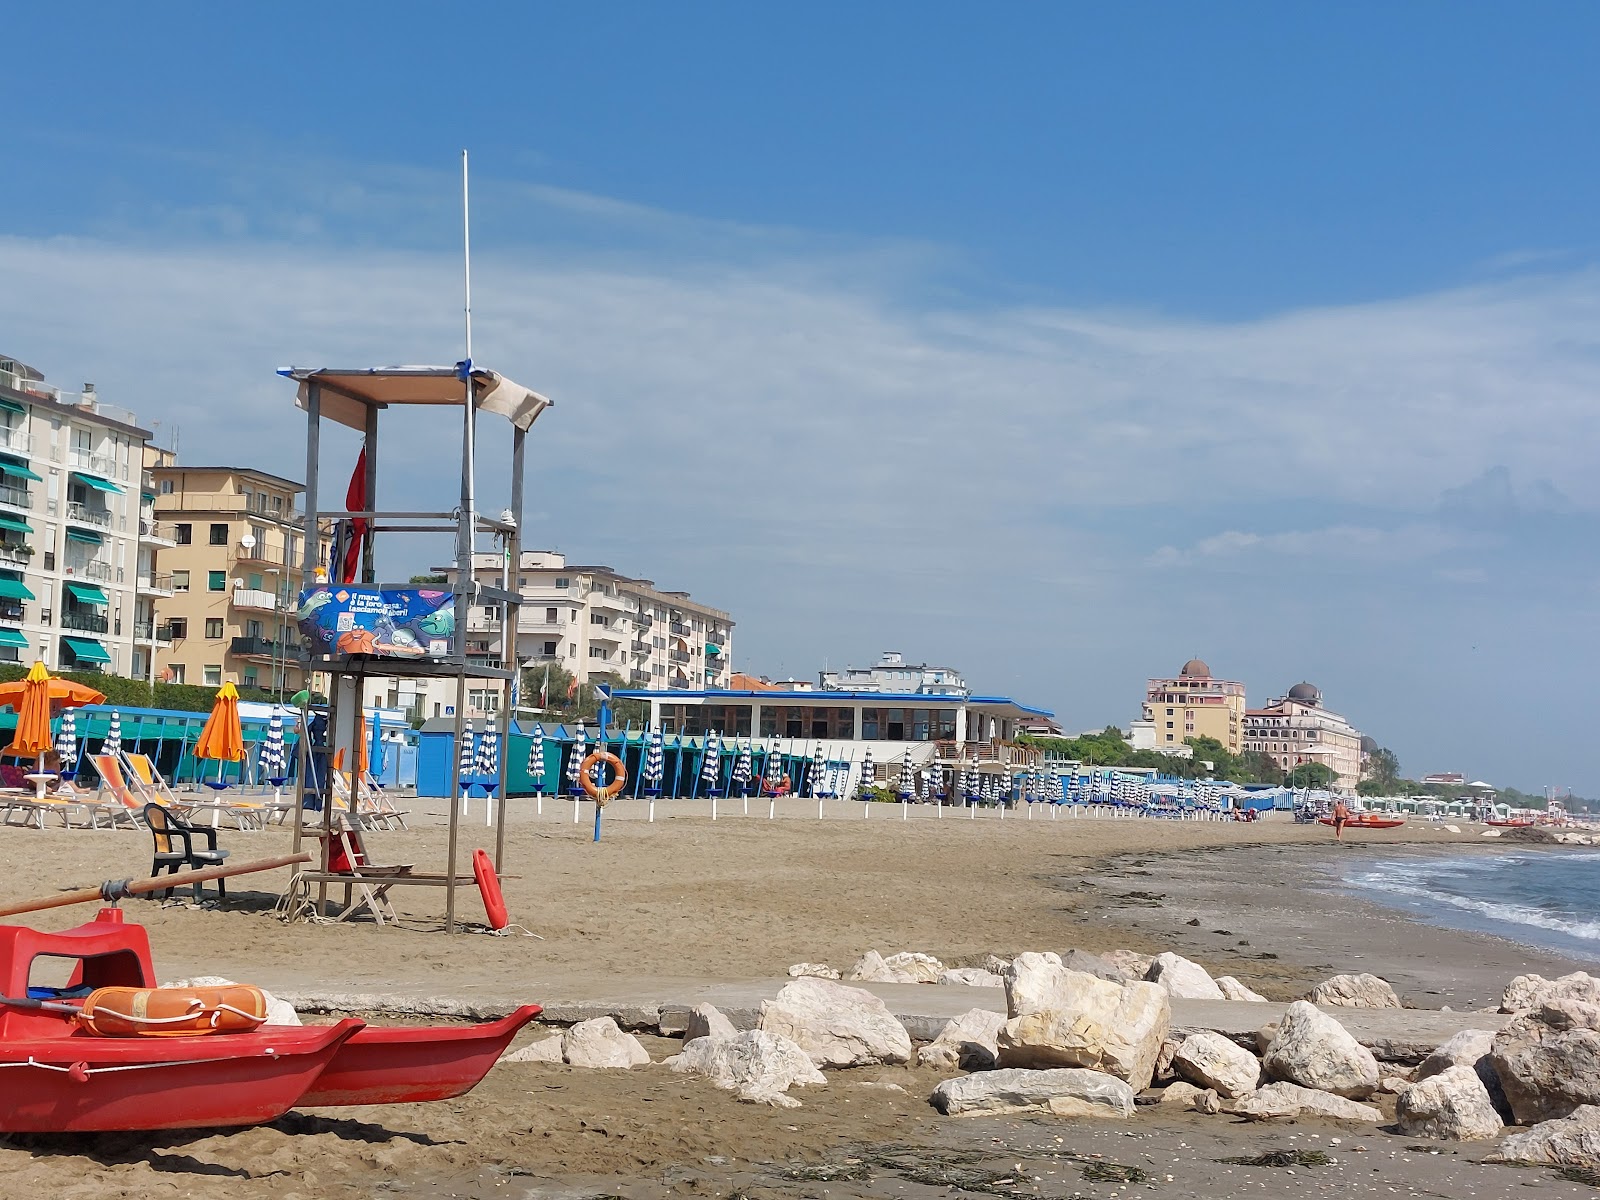 Fotografie cu Murazzi Spiaggia Libera zonele de facilități